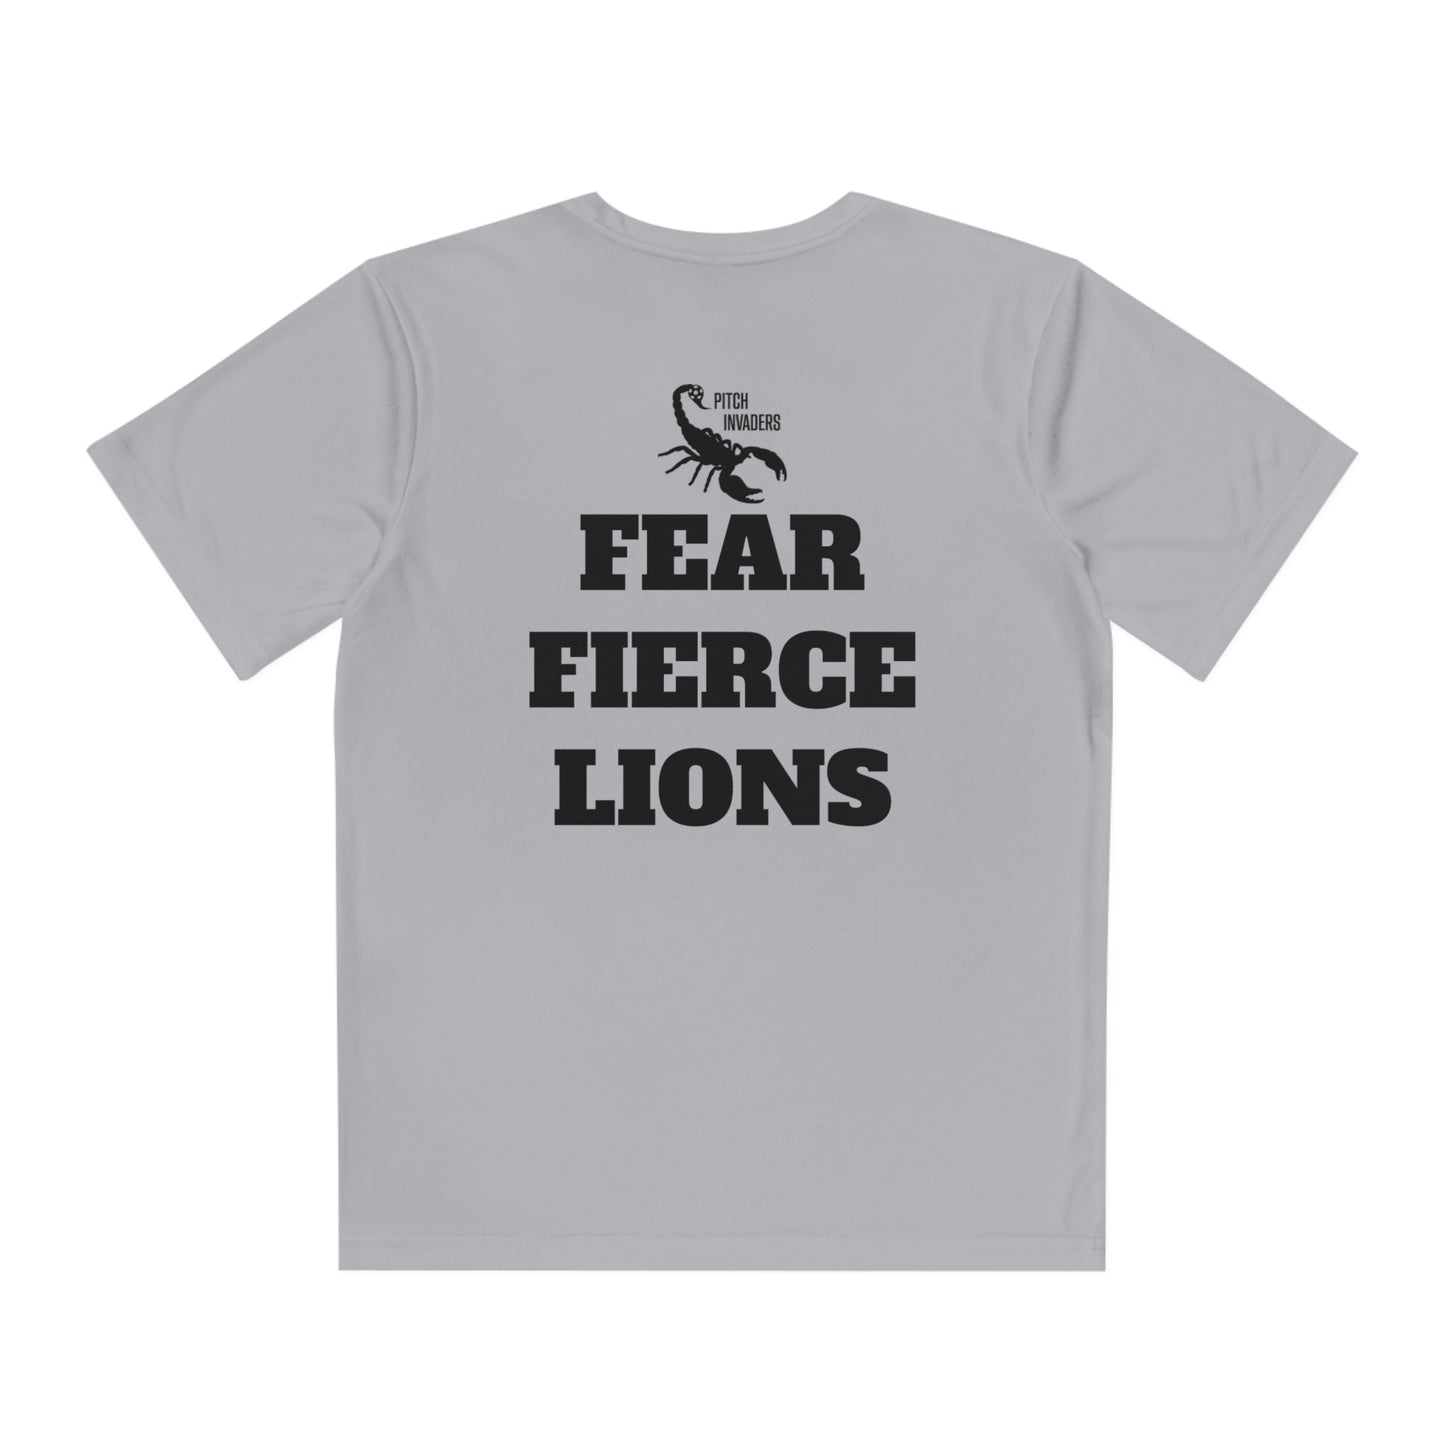 FEAR FIERCE LIONS Youth Athletic T-Shirt (Unisex)